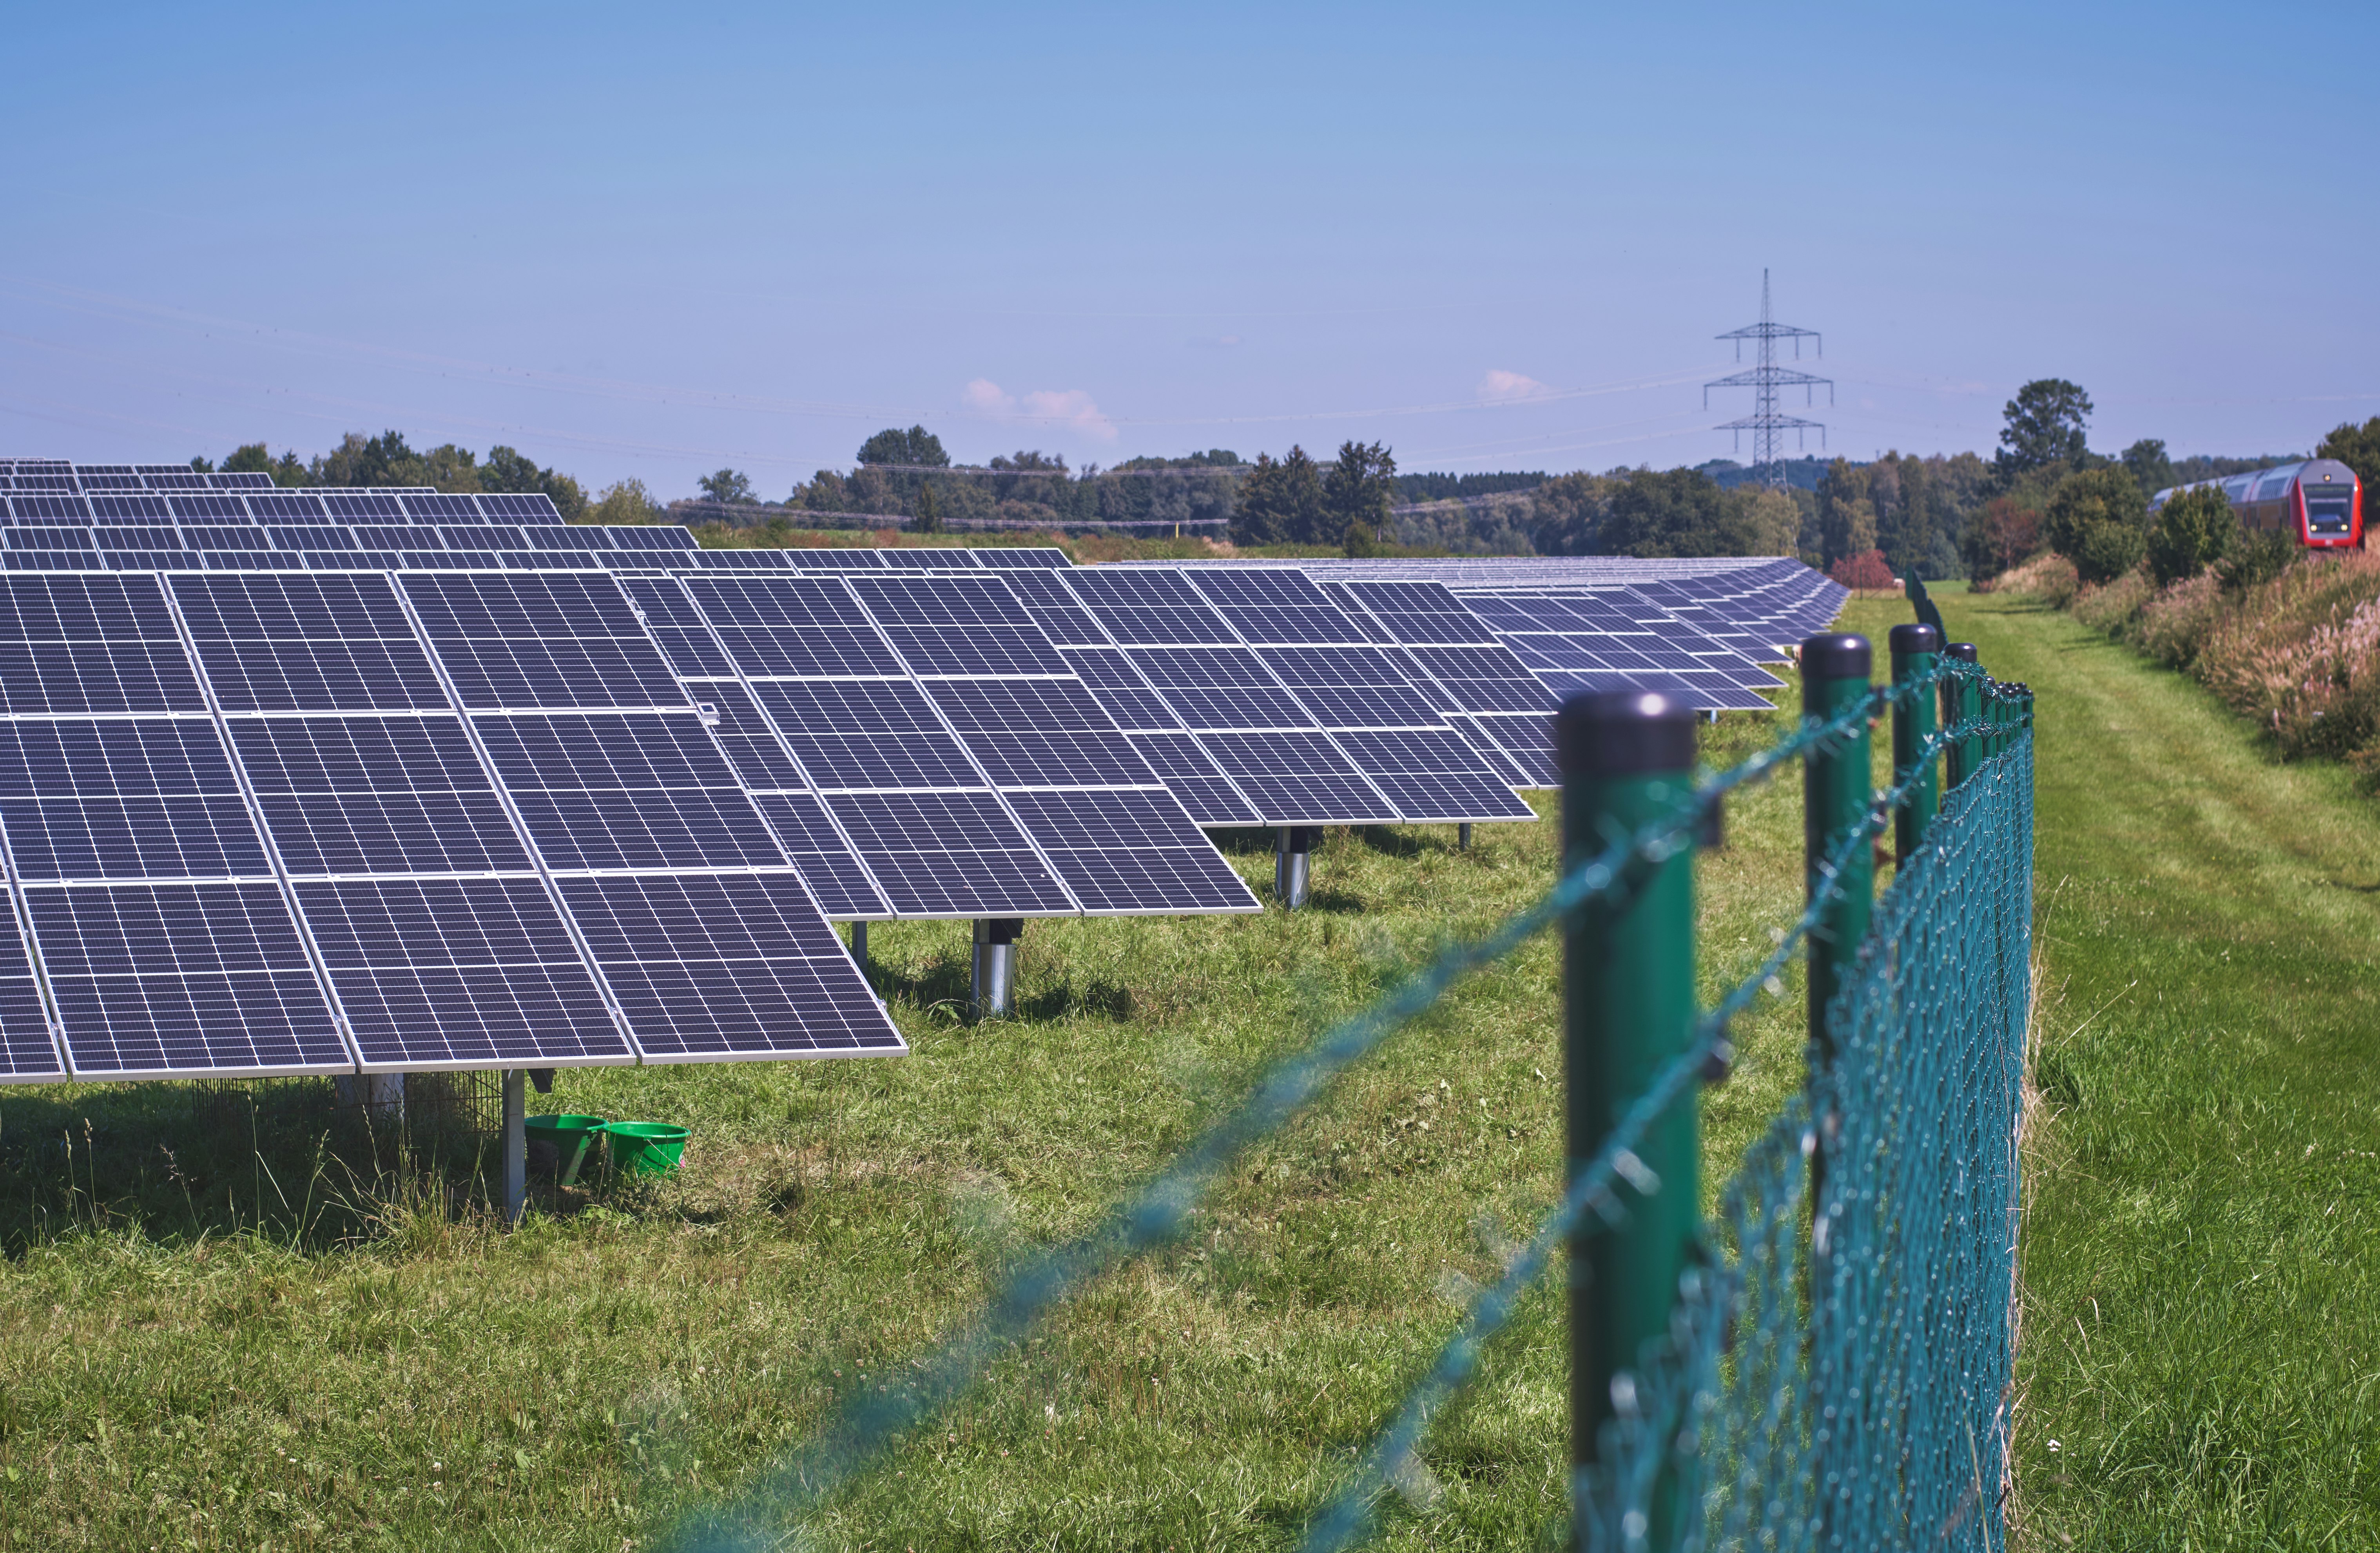 solar panels on green grass field under blue sky during daytime